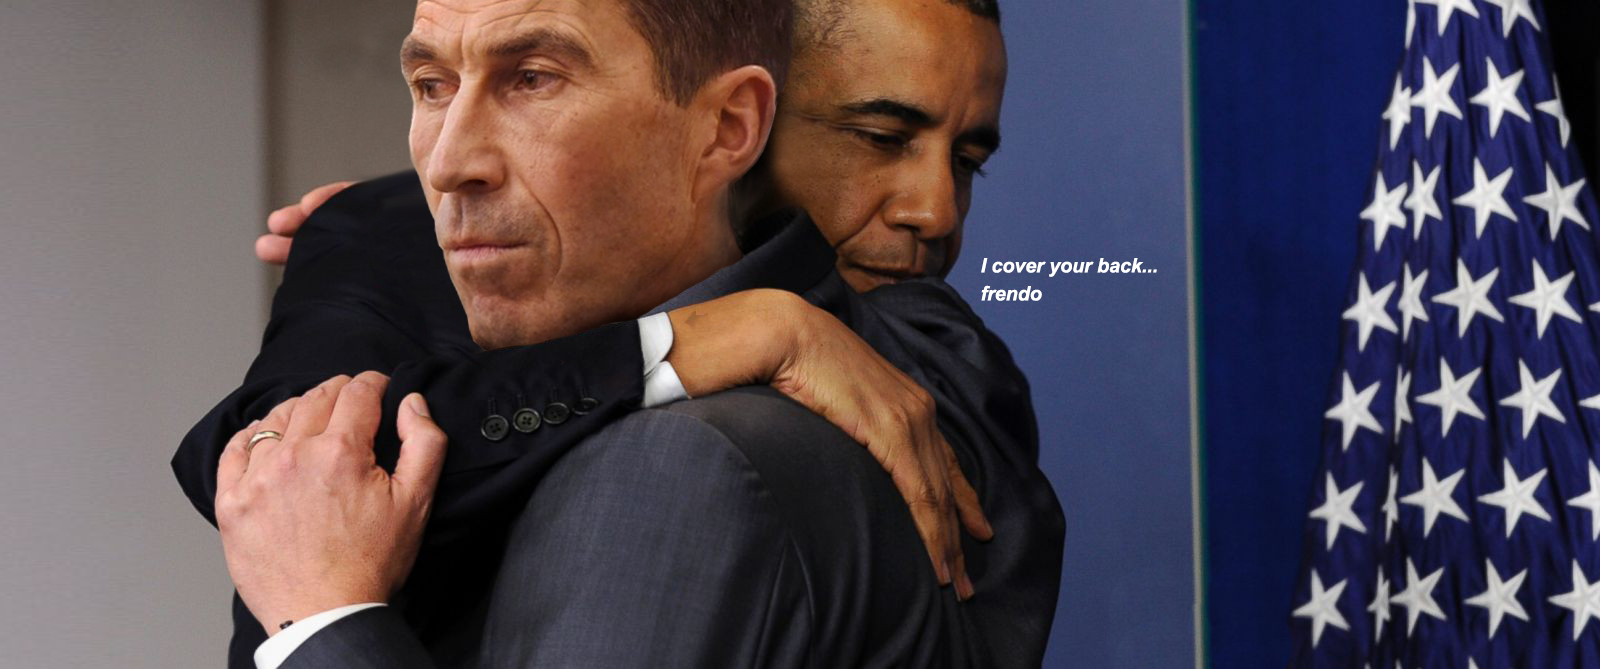 Obama kramar Micael Bydén - Retuscherat